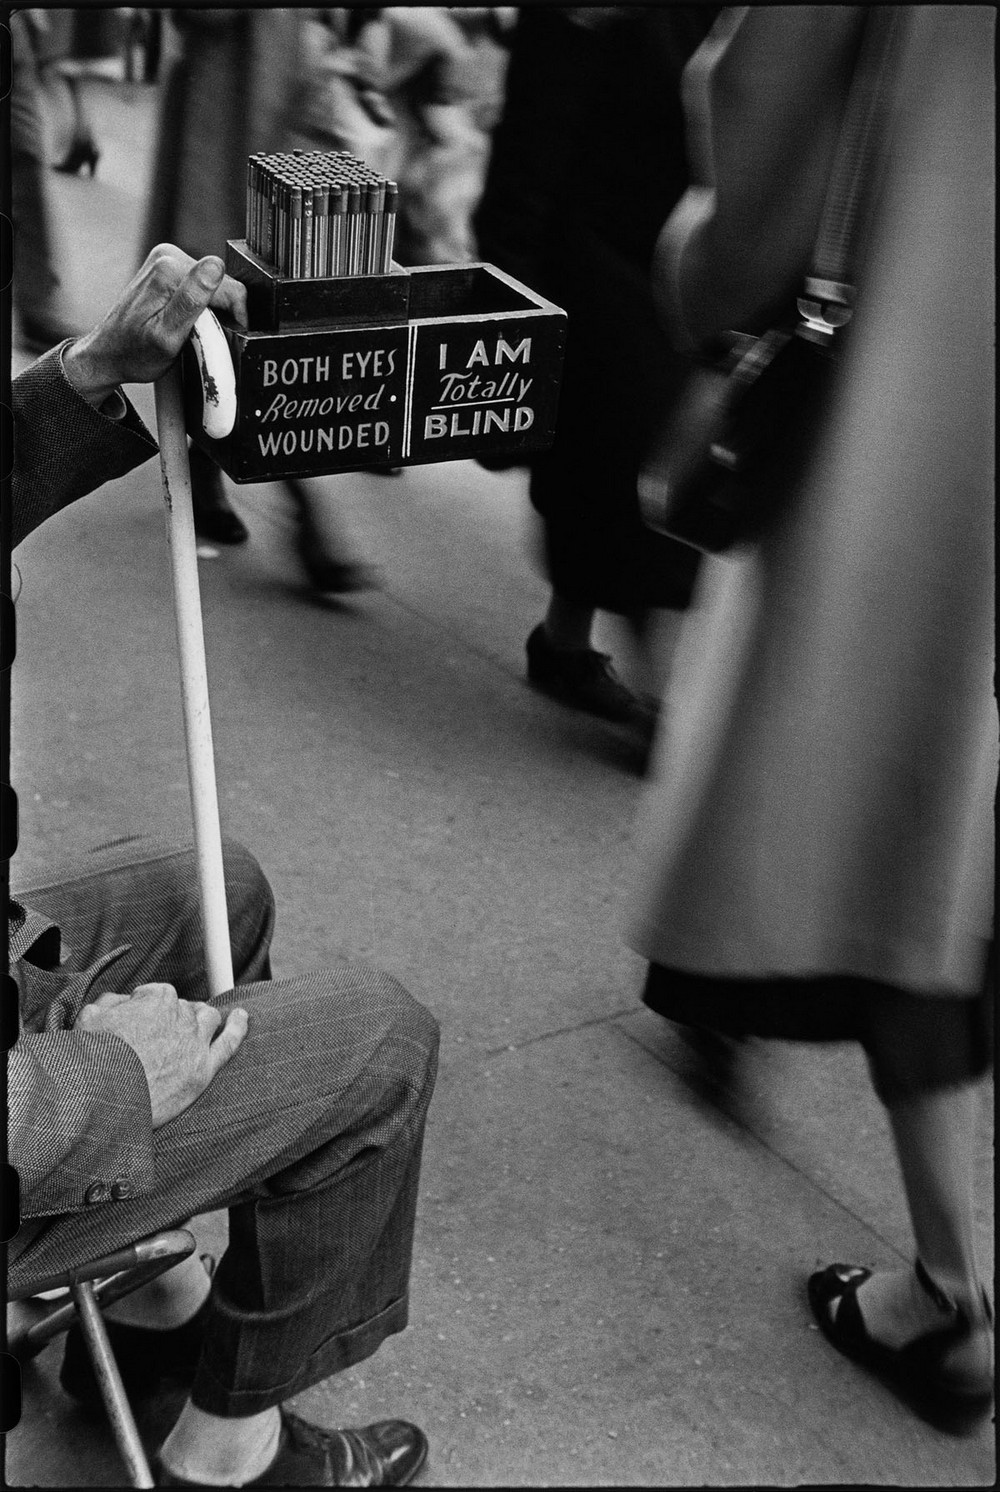 Луи Фаурер – лирик с фотокамерой на улицах Нью-Йорка  18